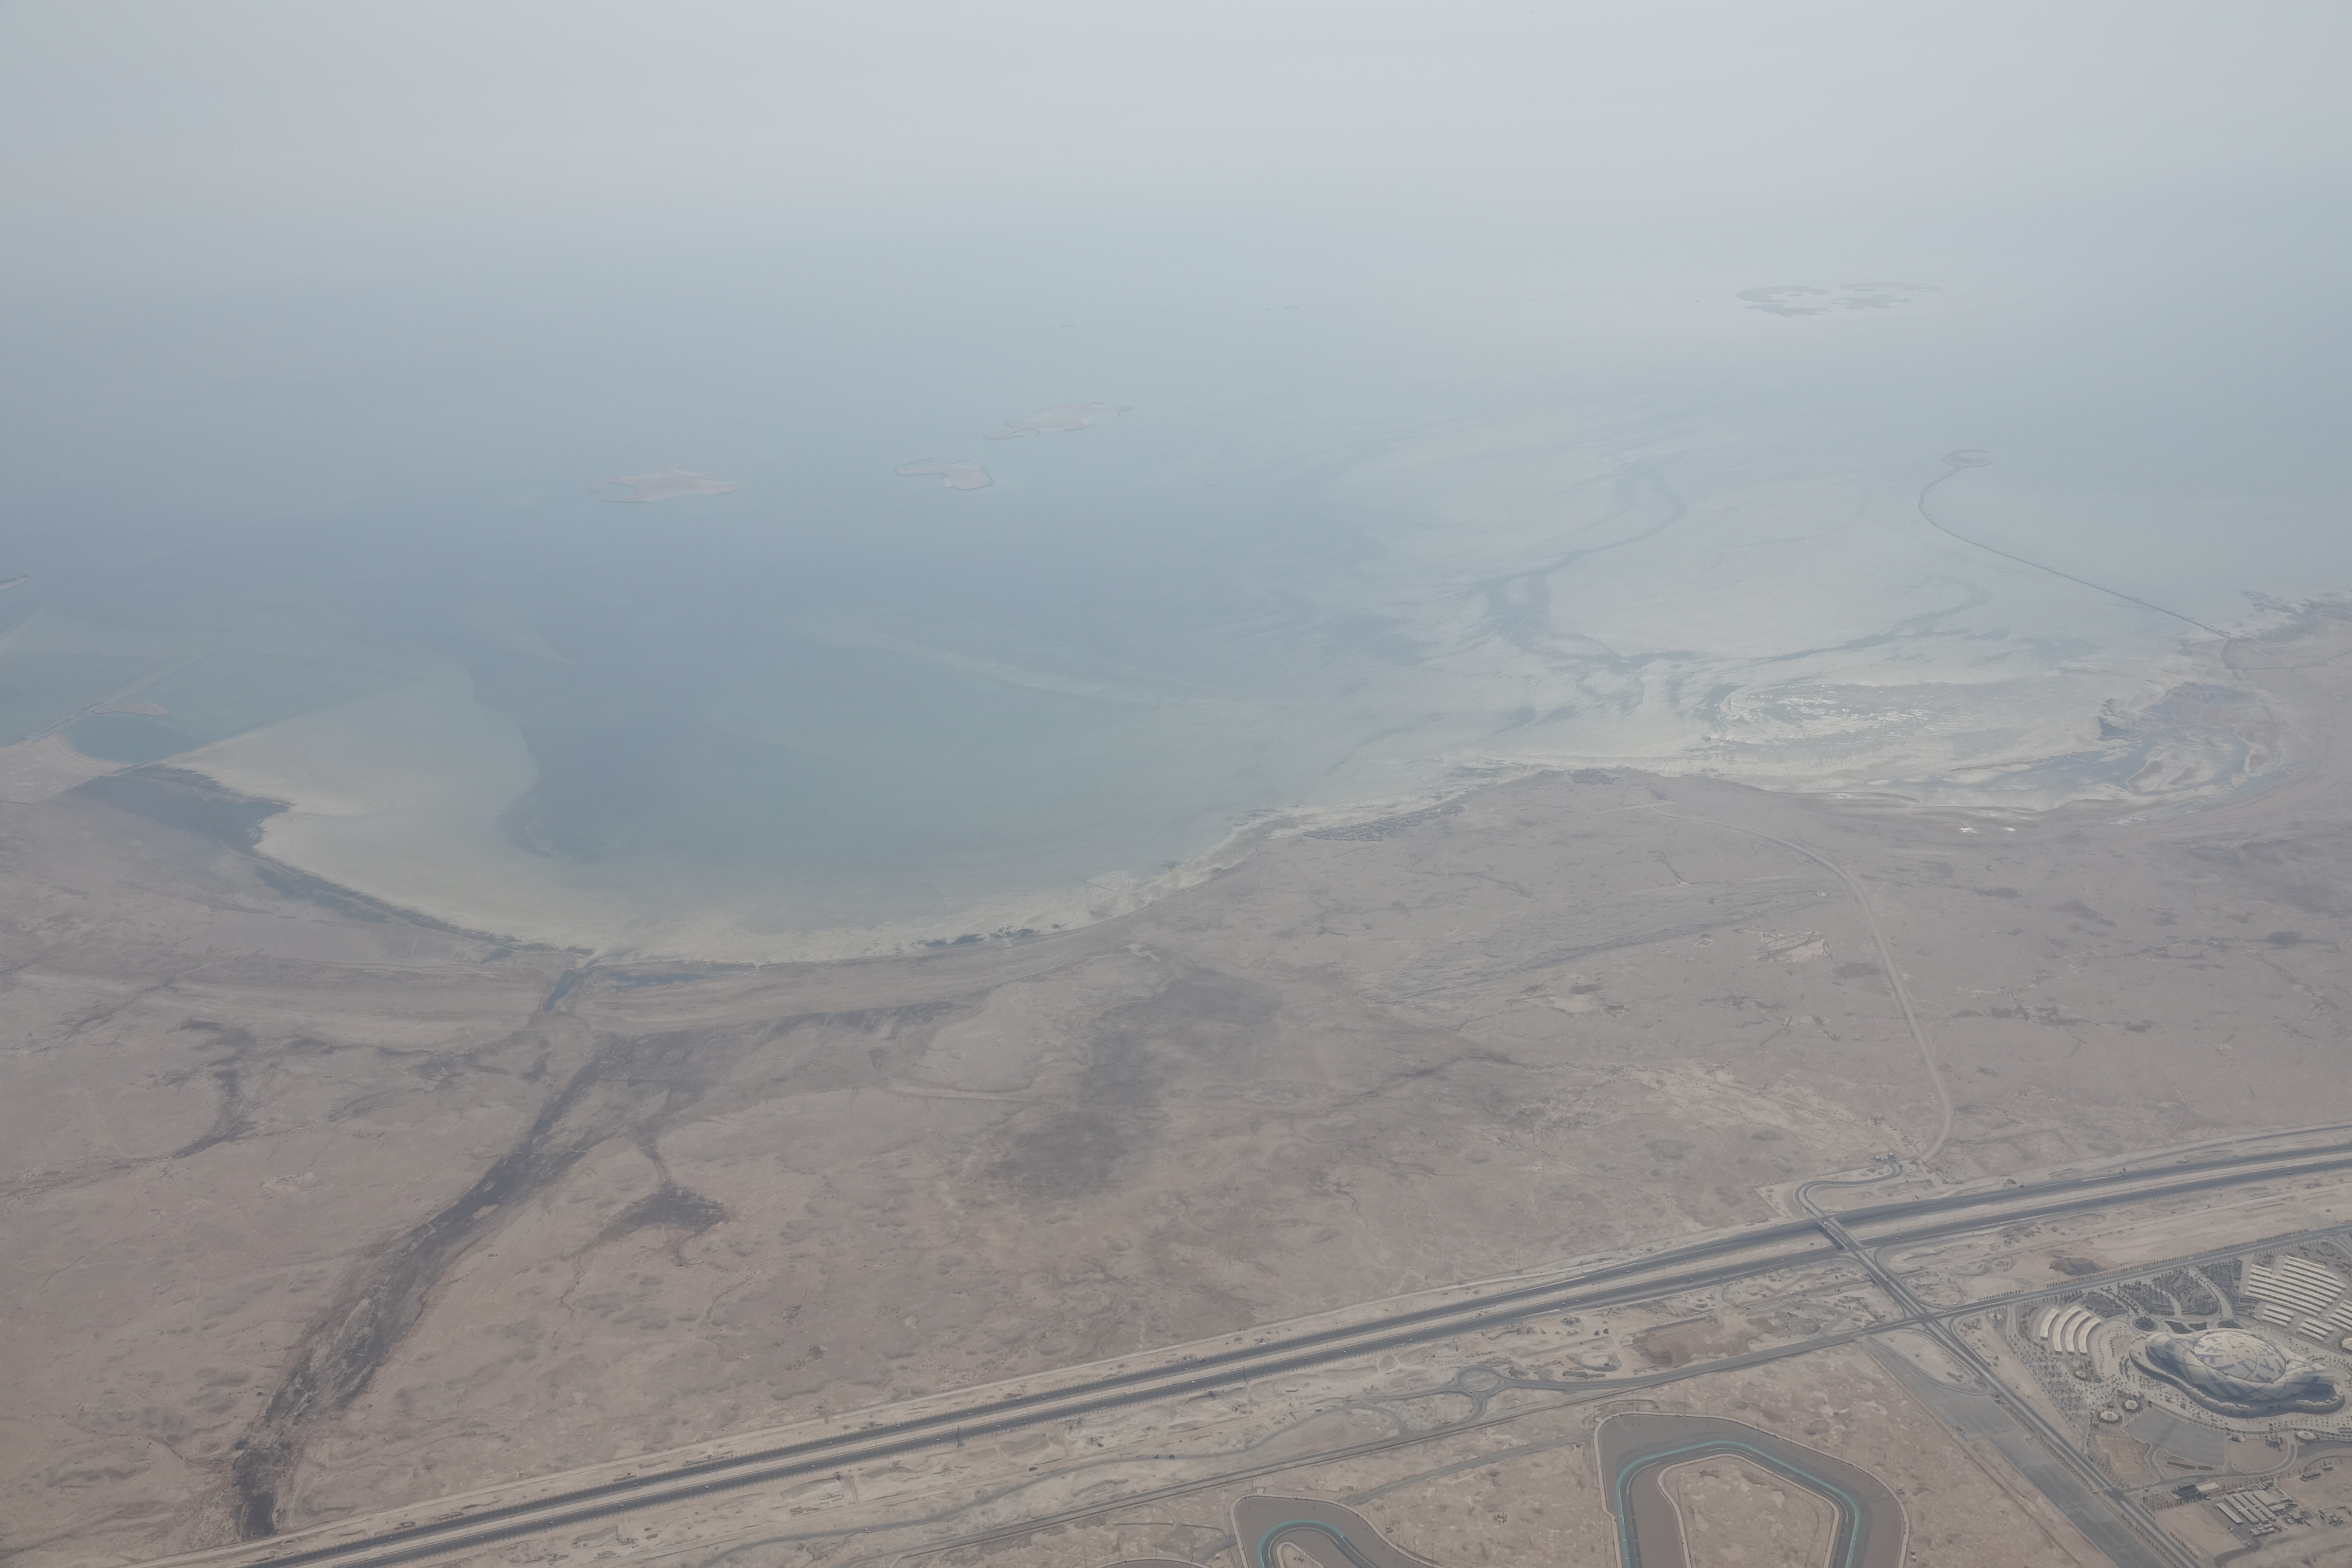 an aerial view of a desert landscape